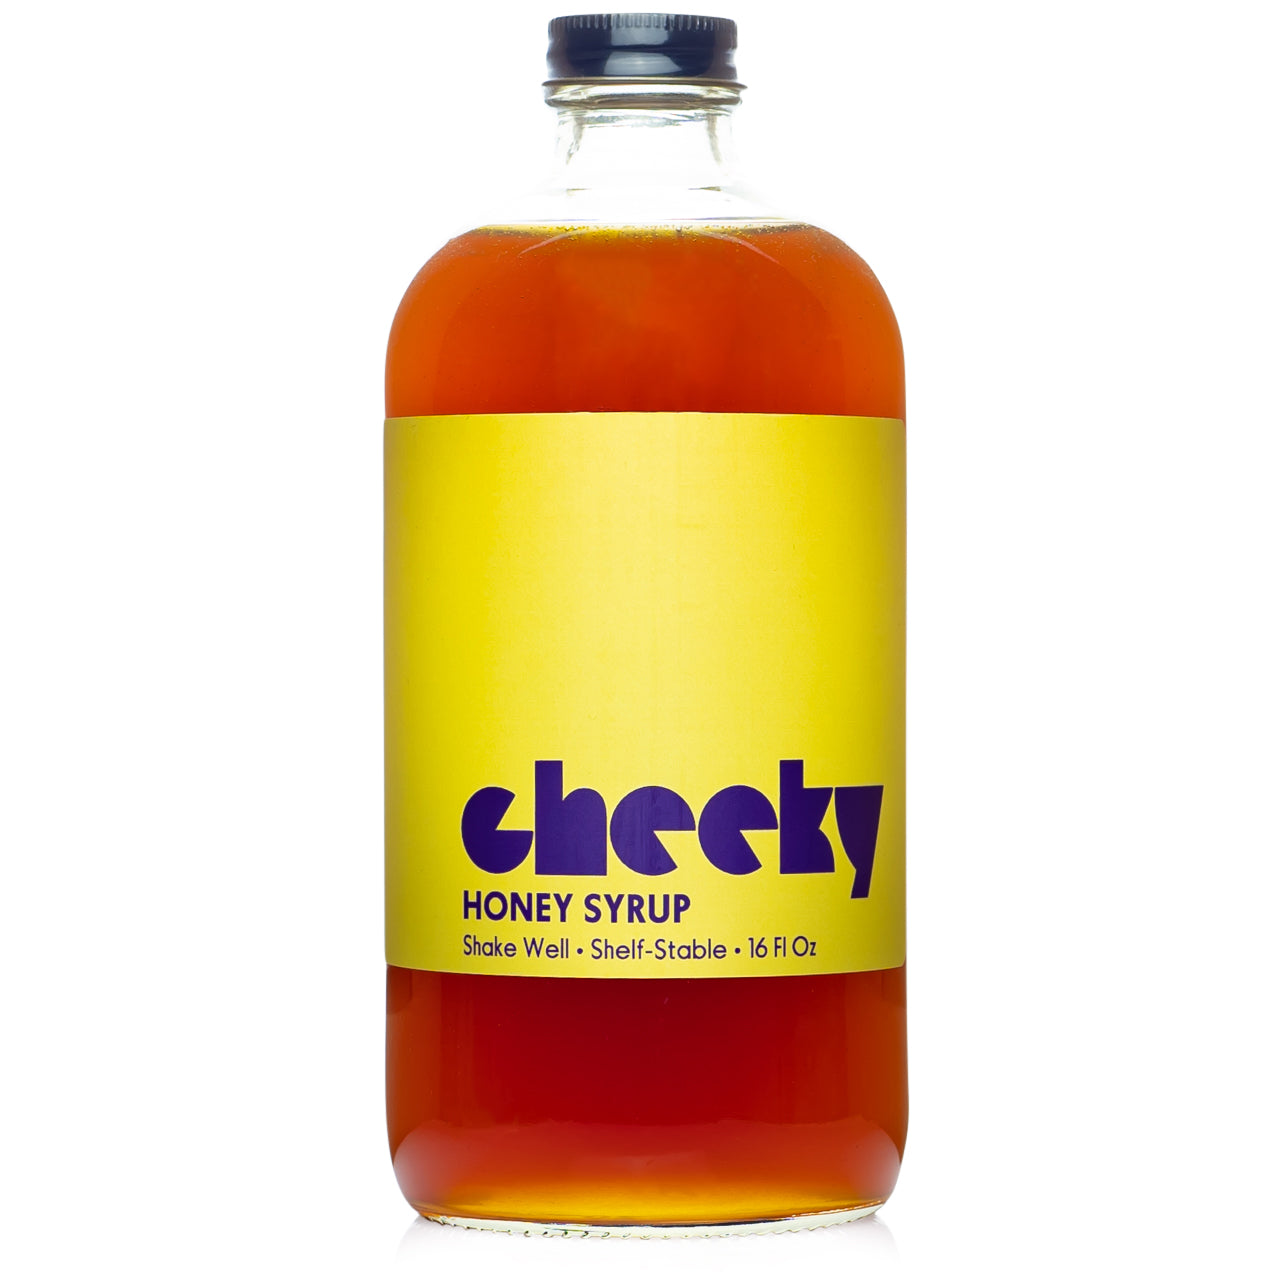 Cheeky Honey Syrup